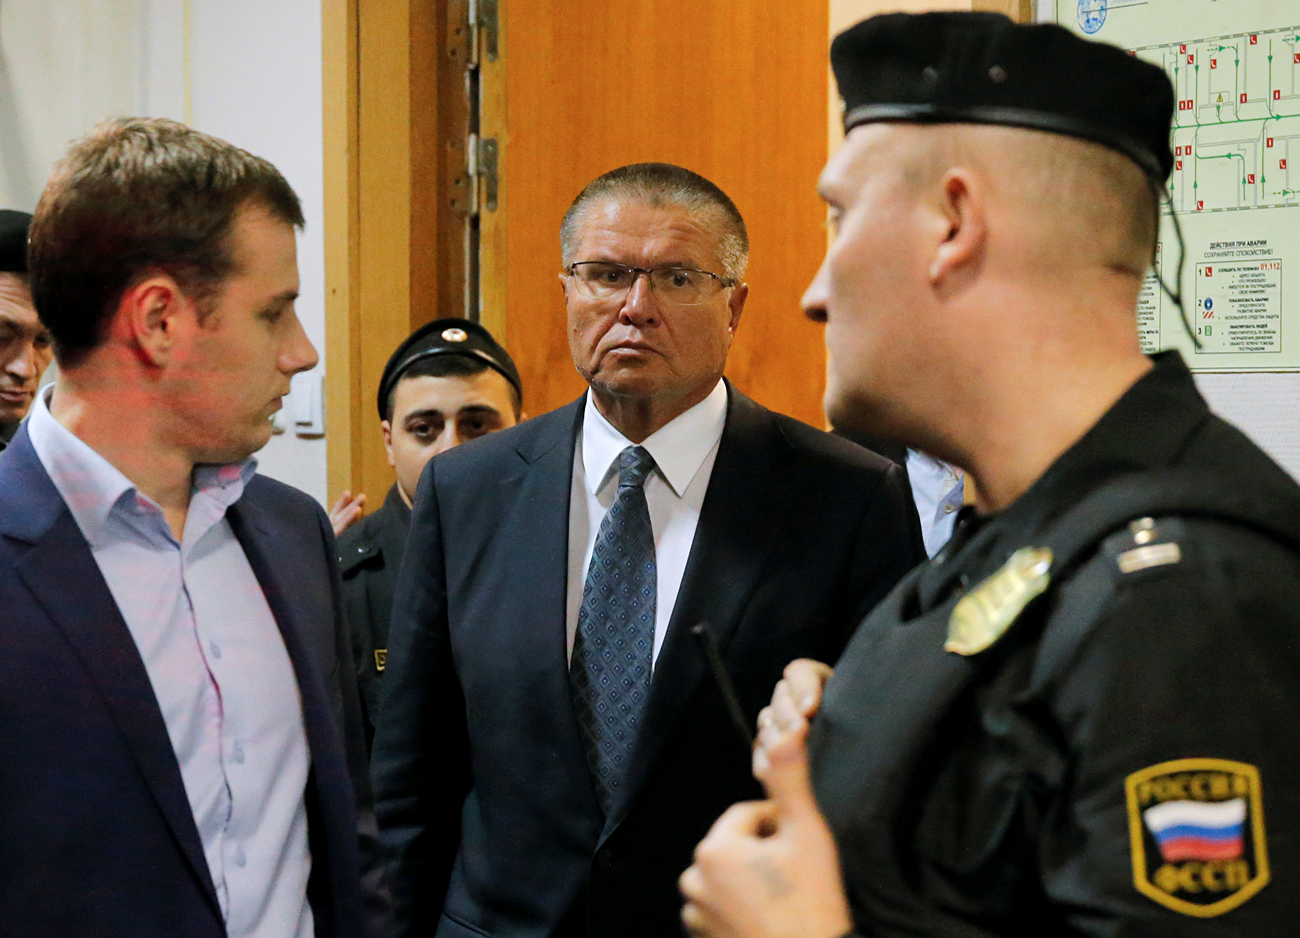 Menteri Ekonomi Rusia Alexei Ulyukayev yang ditahan oleh aparat penegak hukum atas tuduhan korupsi, dikawal setibanya untuk menjalani proses sidang di pengadilan Distrik Basmanny, Moskow, Rusia, 15 November 2016.